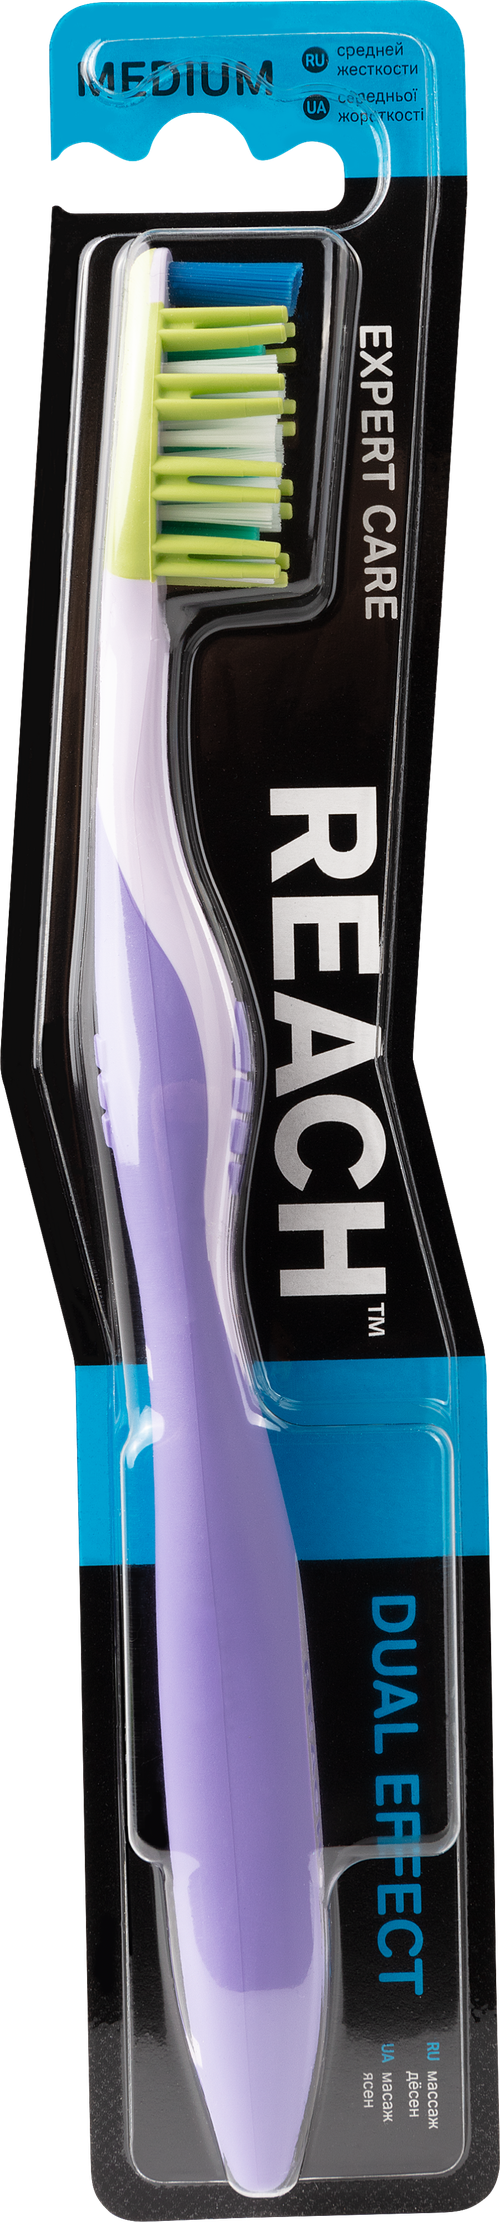 REACH Зубная щетка Dual effect Массаж дёсен средней жесткости , violet